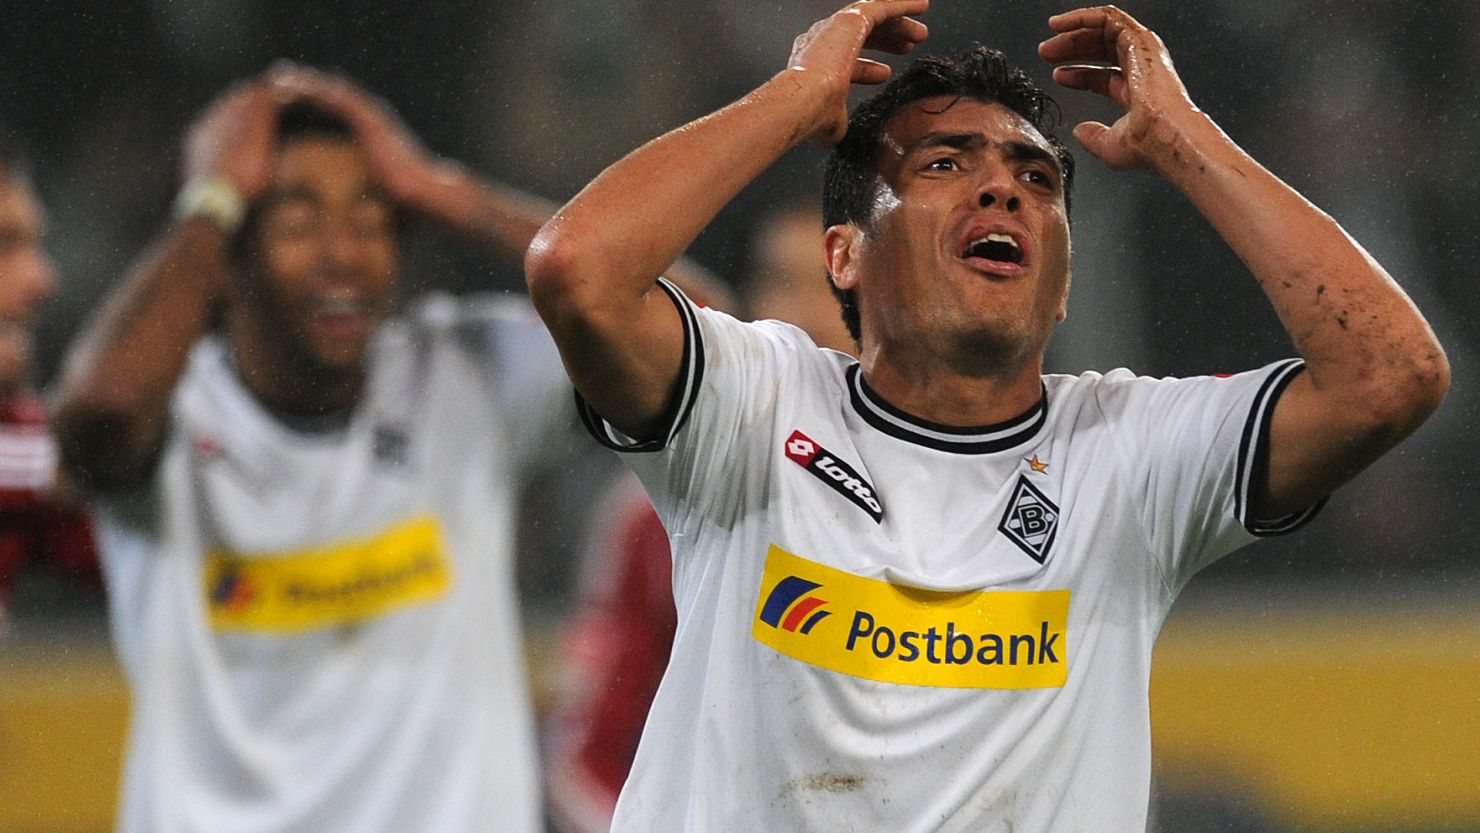 Moenchengladbach midfielder Juan Arango and defender Dante show their frustration in the 1-1 home draw.